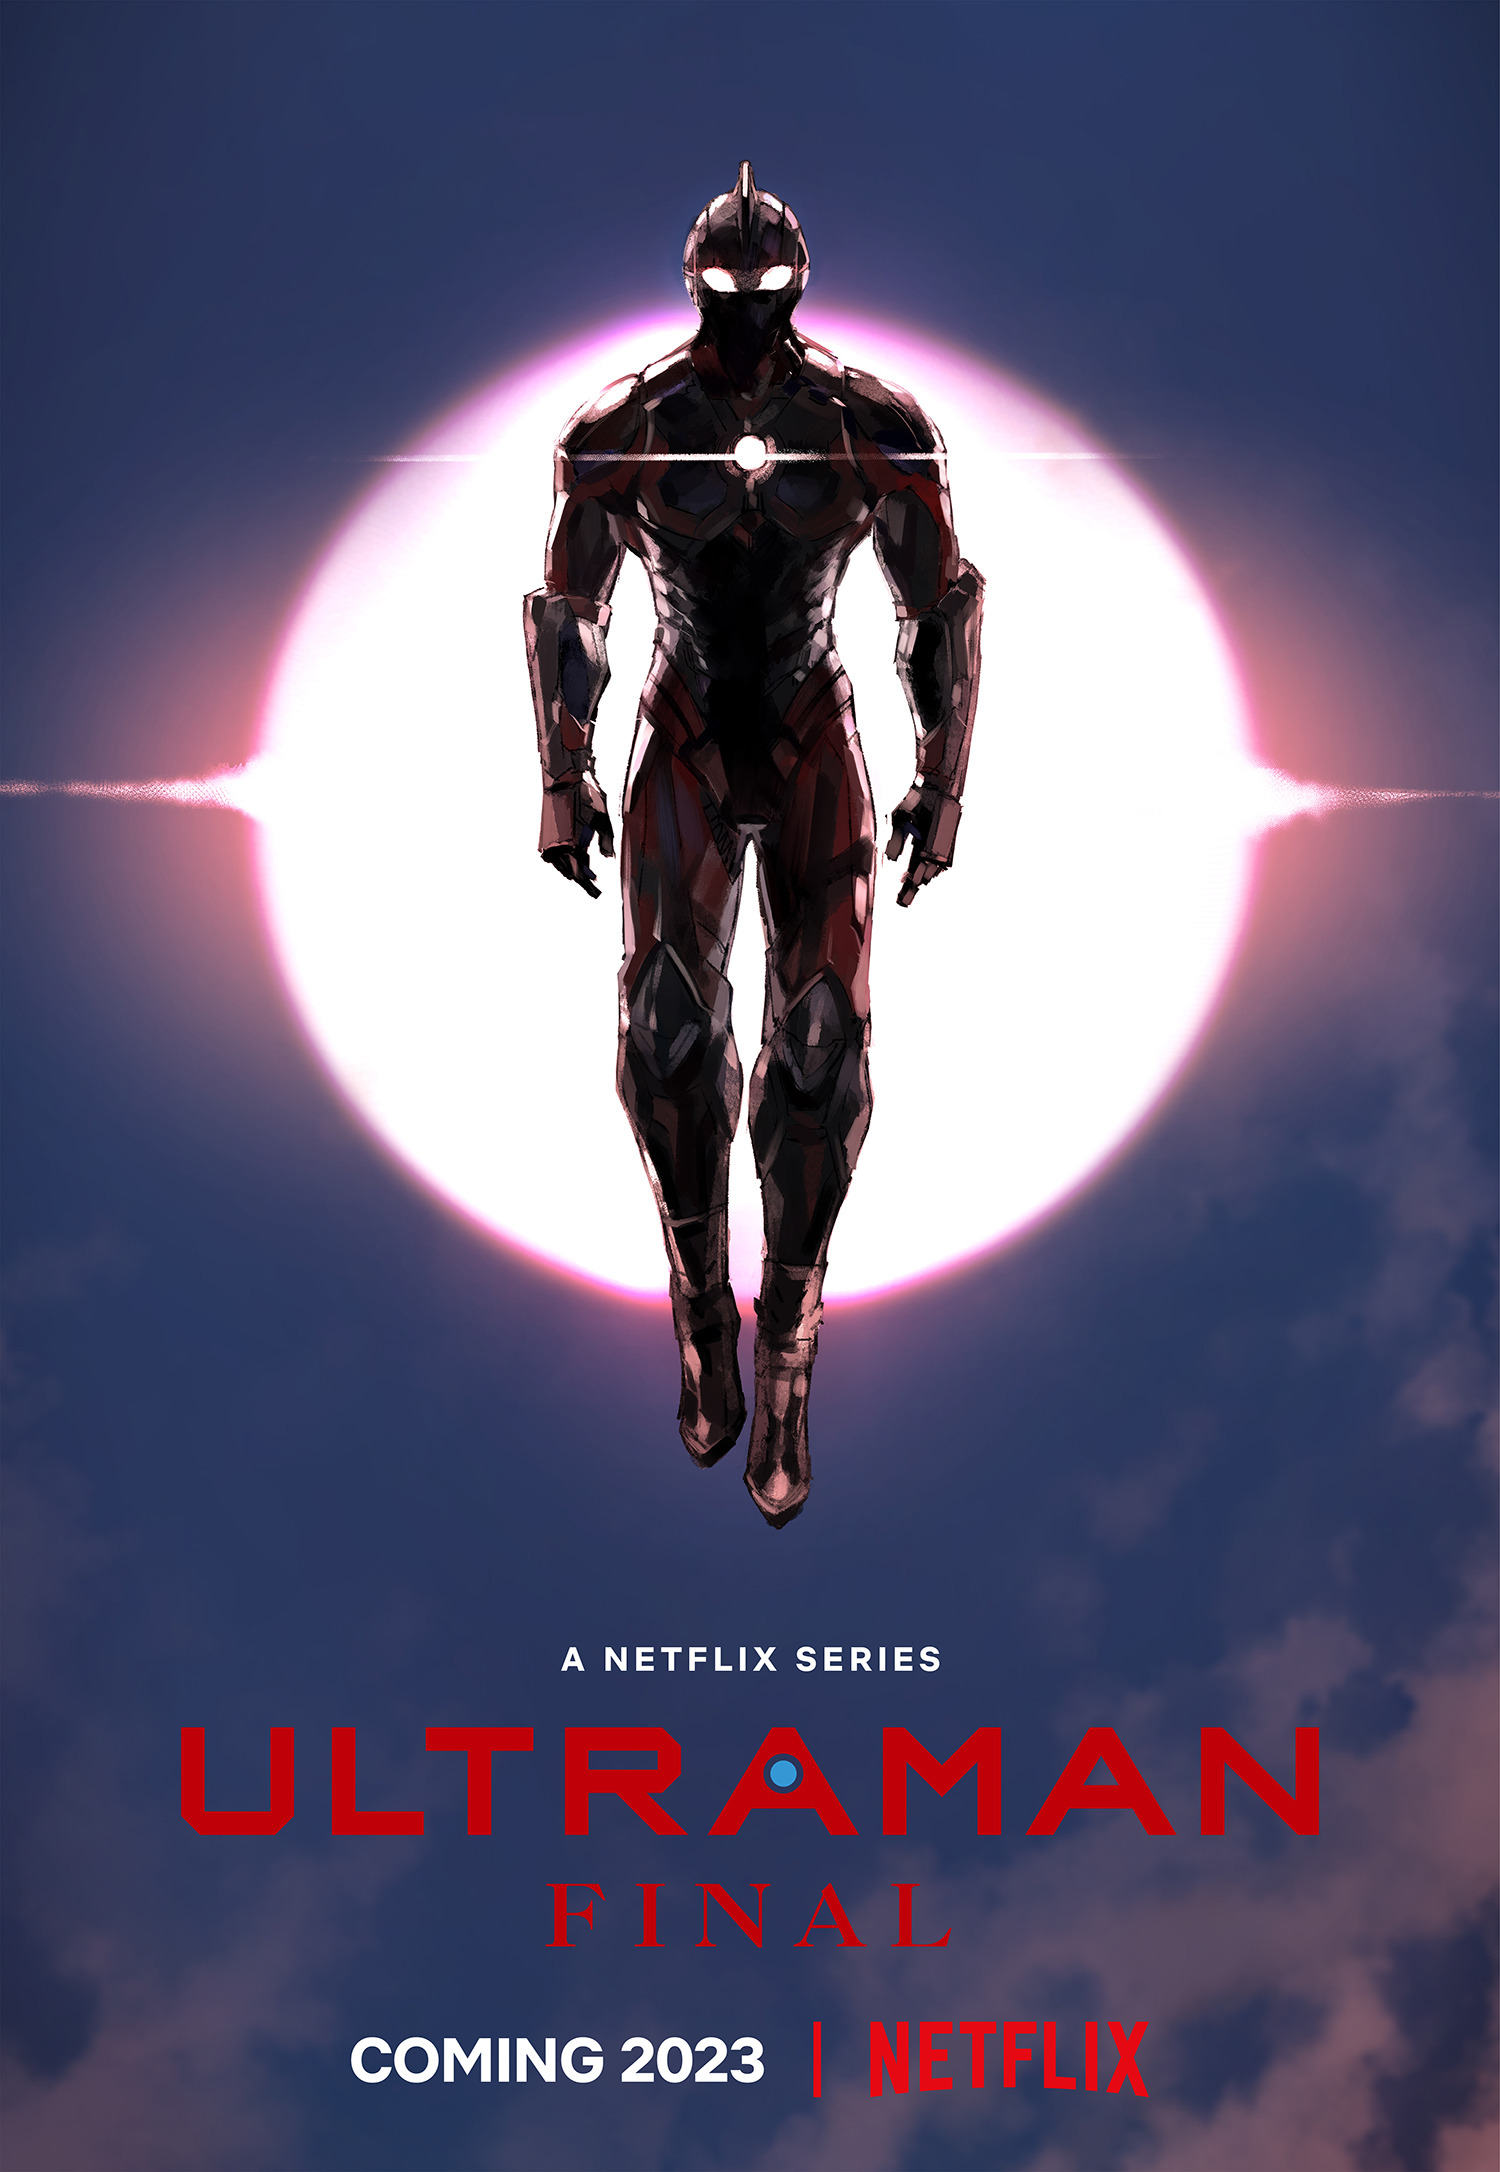 Mega Sized TV Poster Image for Ultraman (#5 of 7)